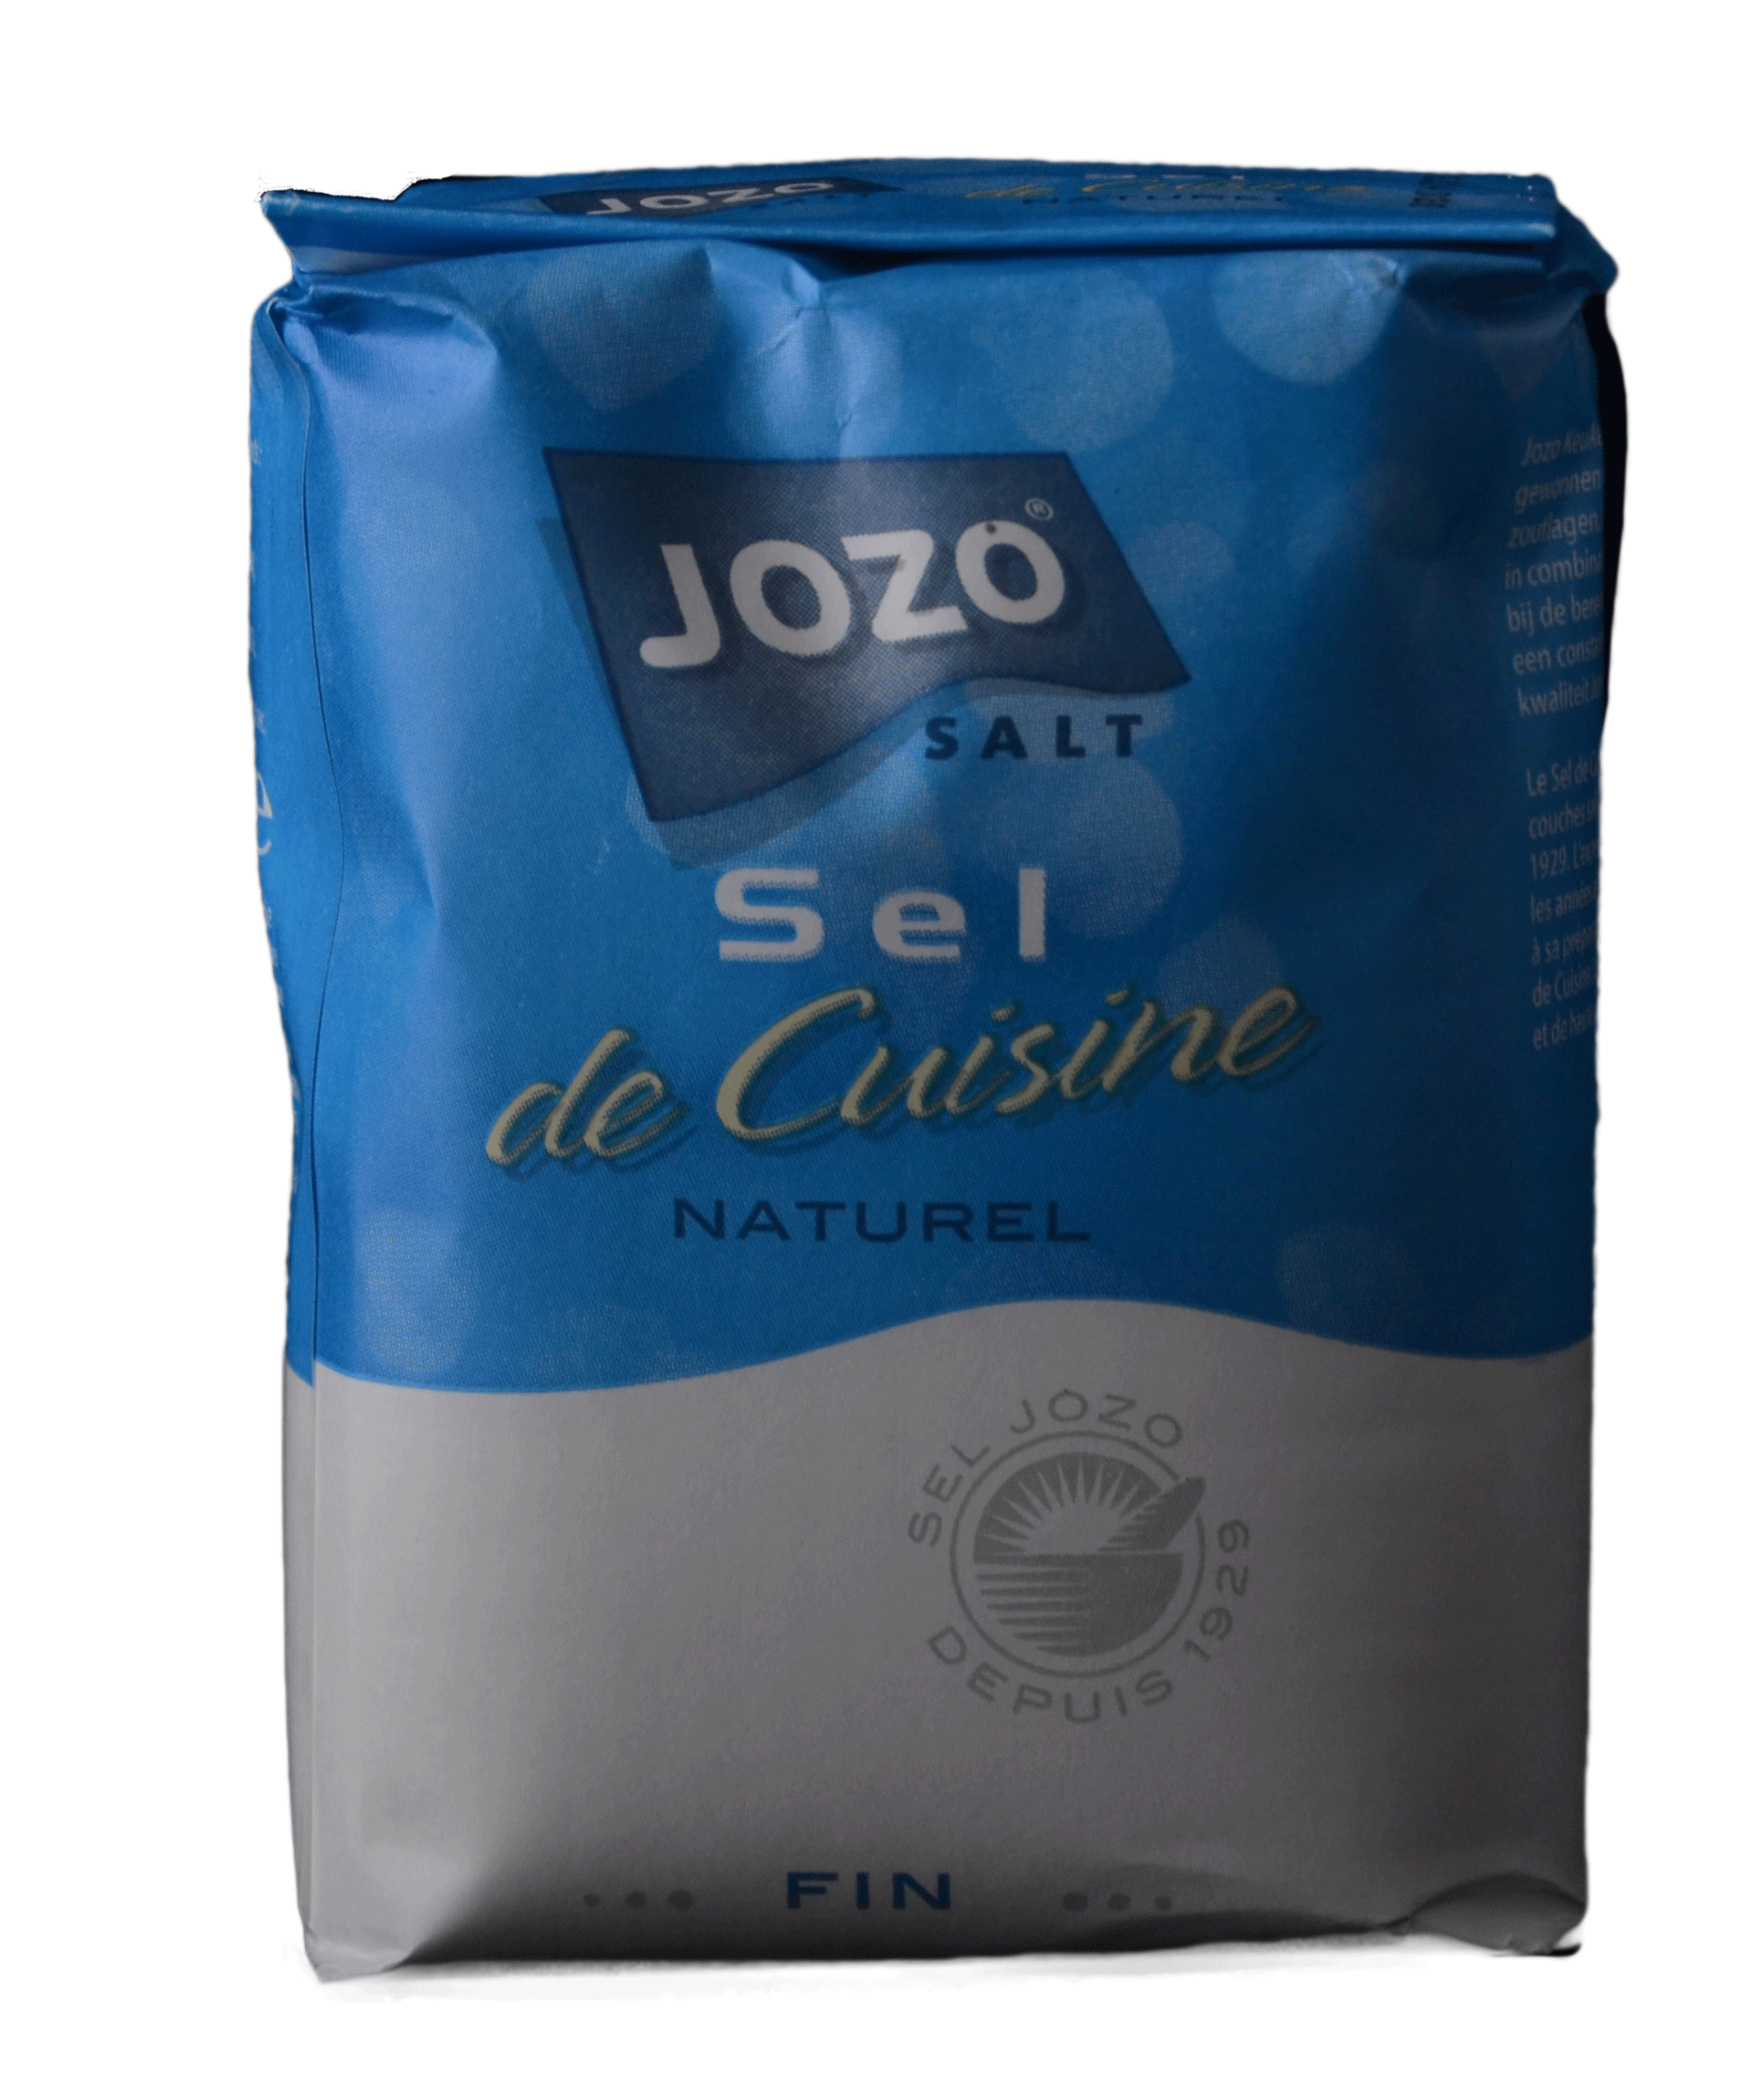 Jozo fijn zout 1kg keukenzout naturel